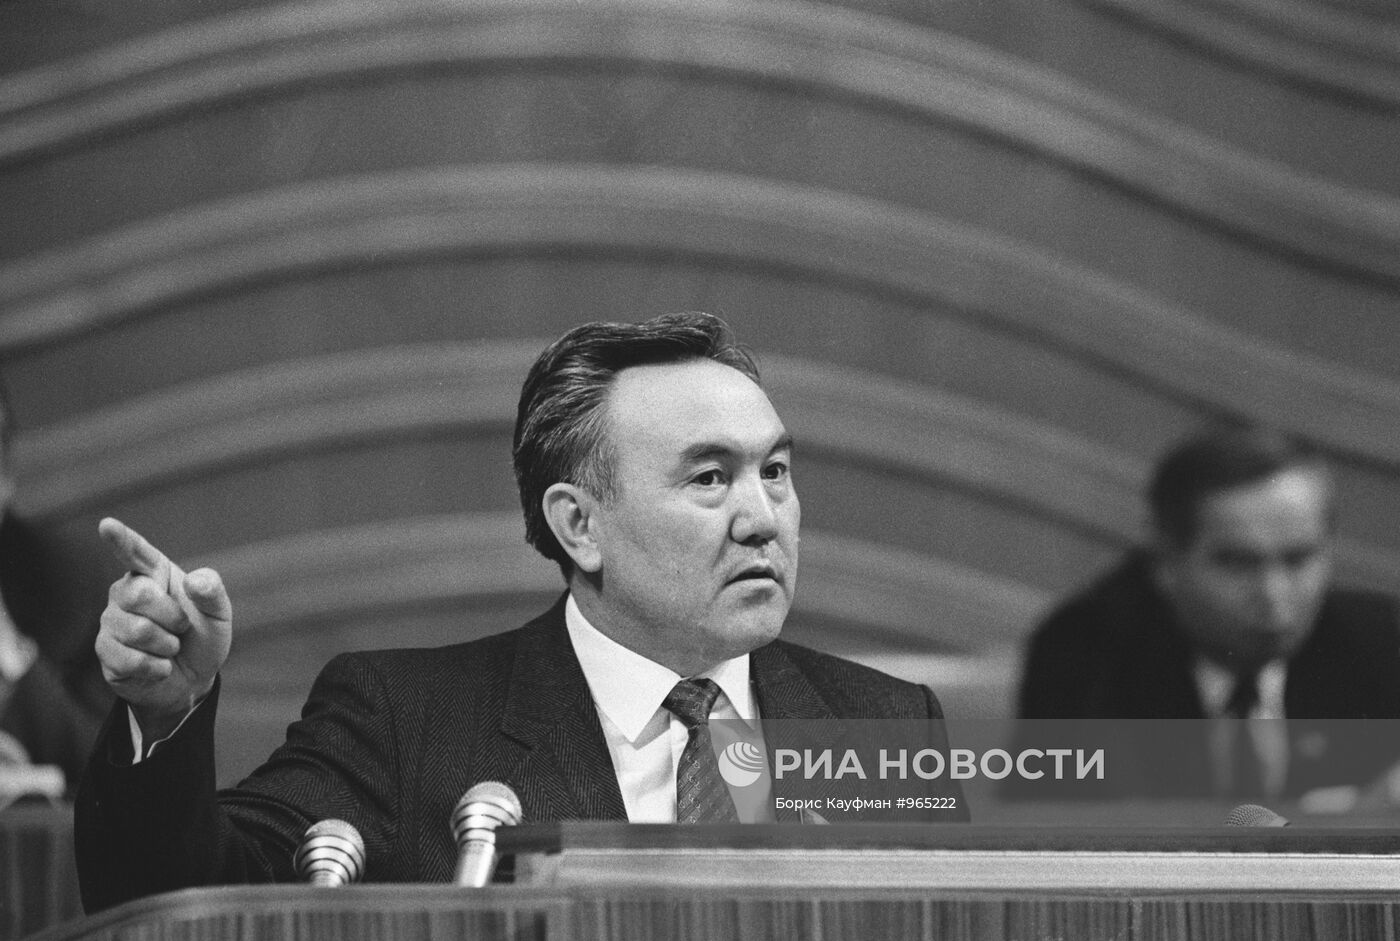 Н.А. Назарбаев